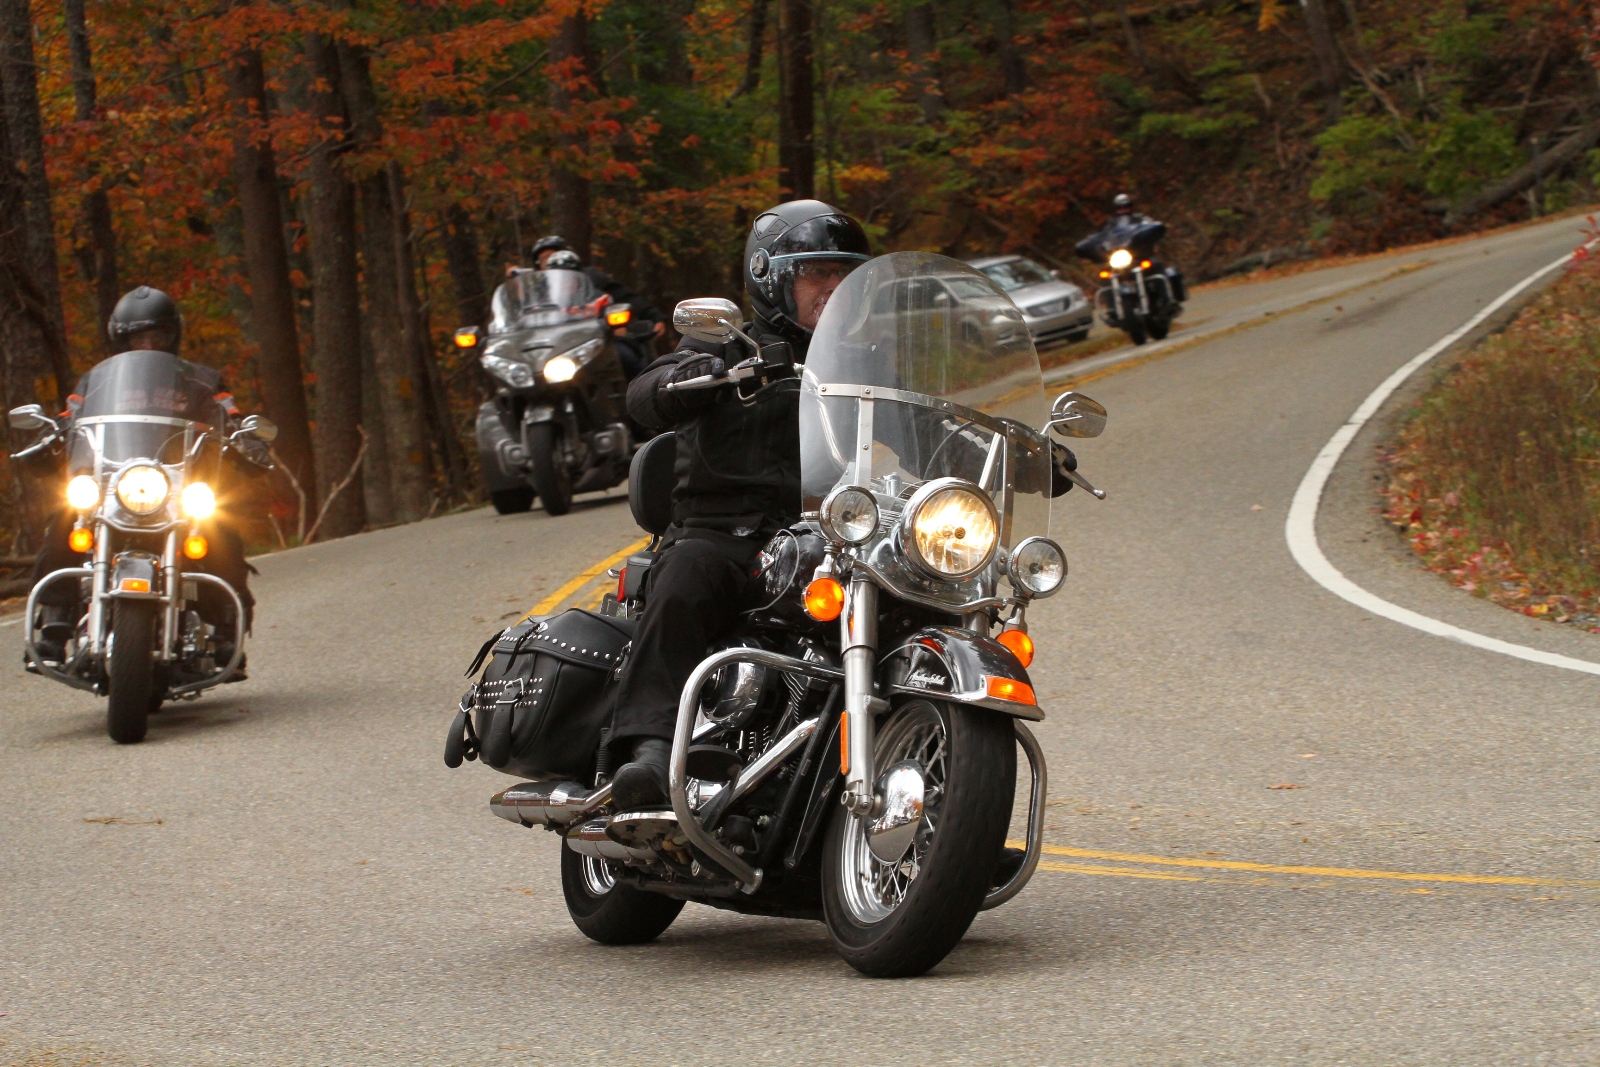 Eagle Rider Route 66 Motorradreisen Motorradreisen Mietmotorrad Harley mieten usa